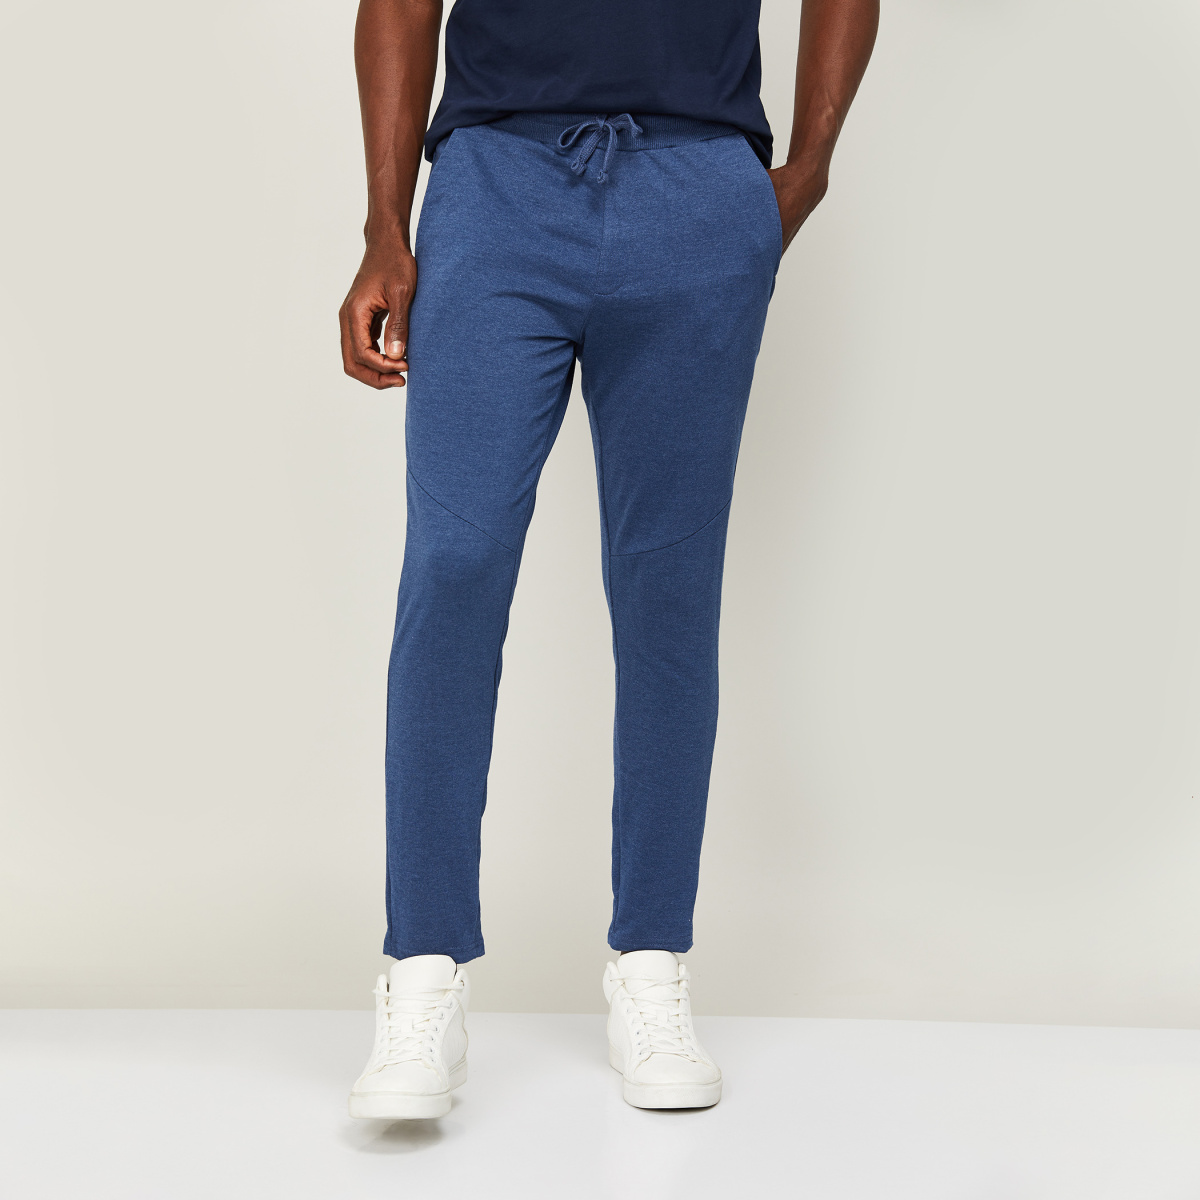 Buy Black Trousers & Pants for Men by RIGO Online | Ajio.com